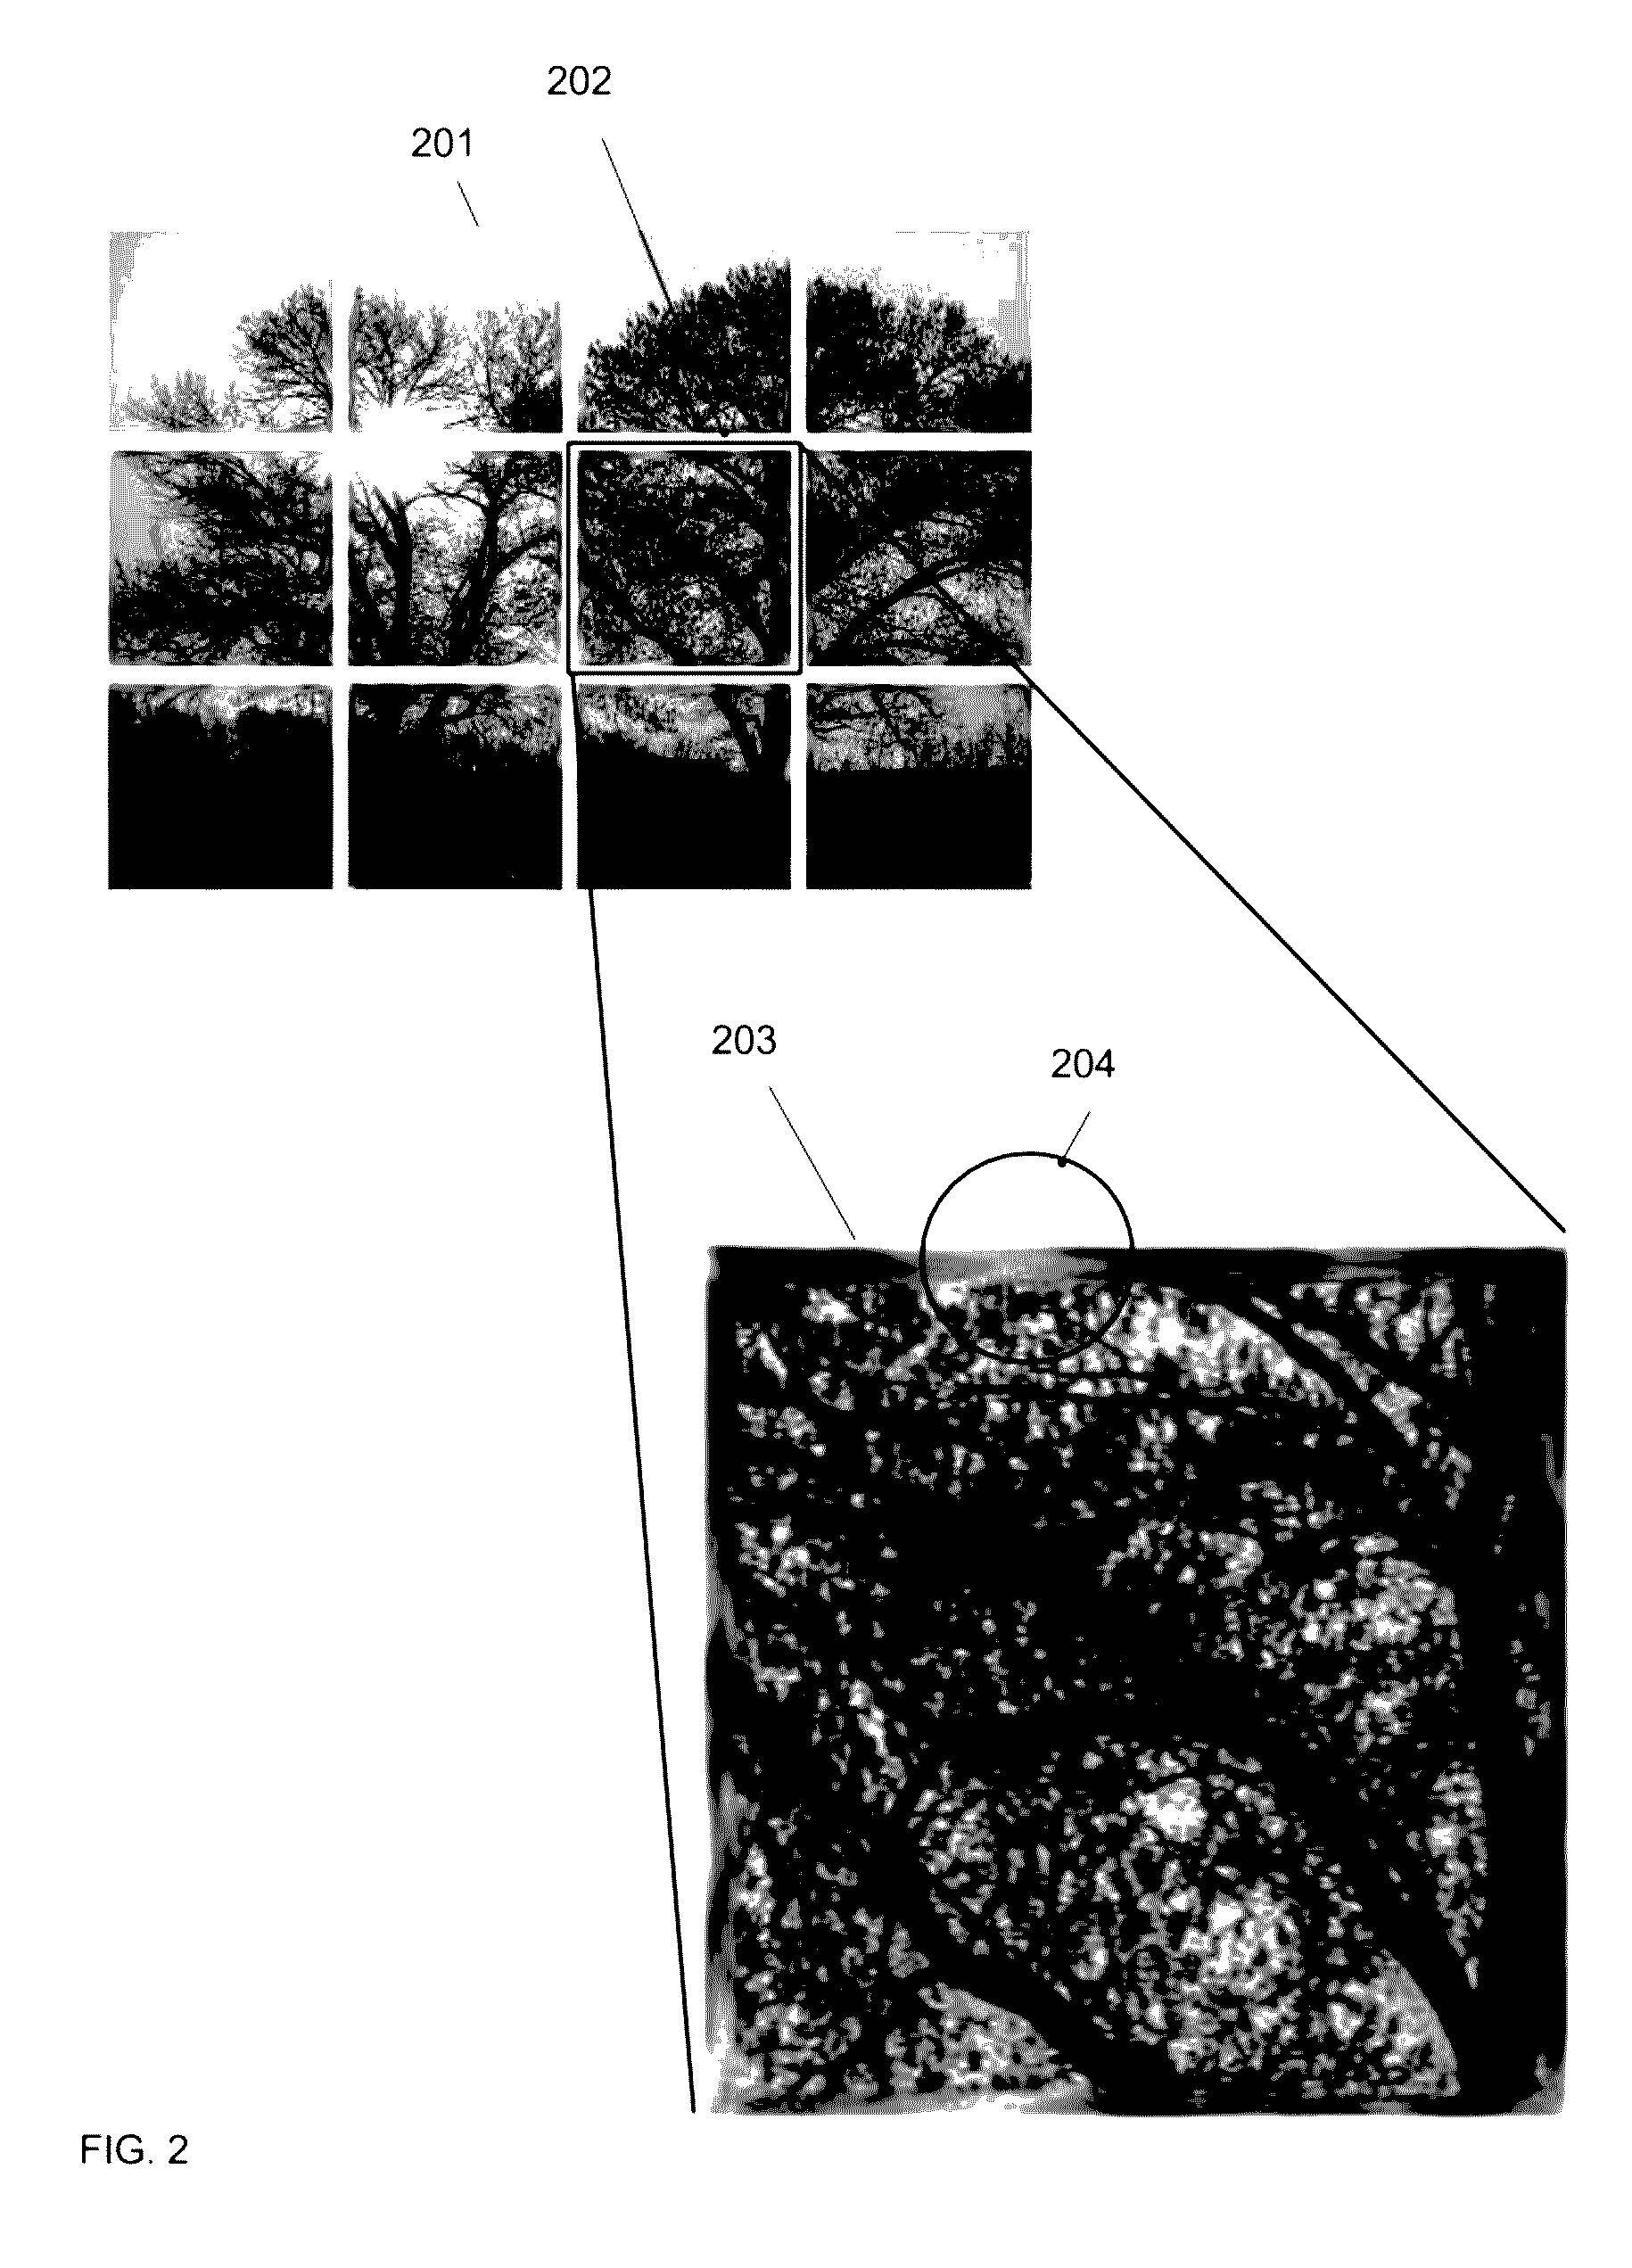 Image based tile puzzle CAPTCHA system